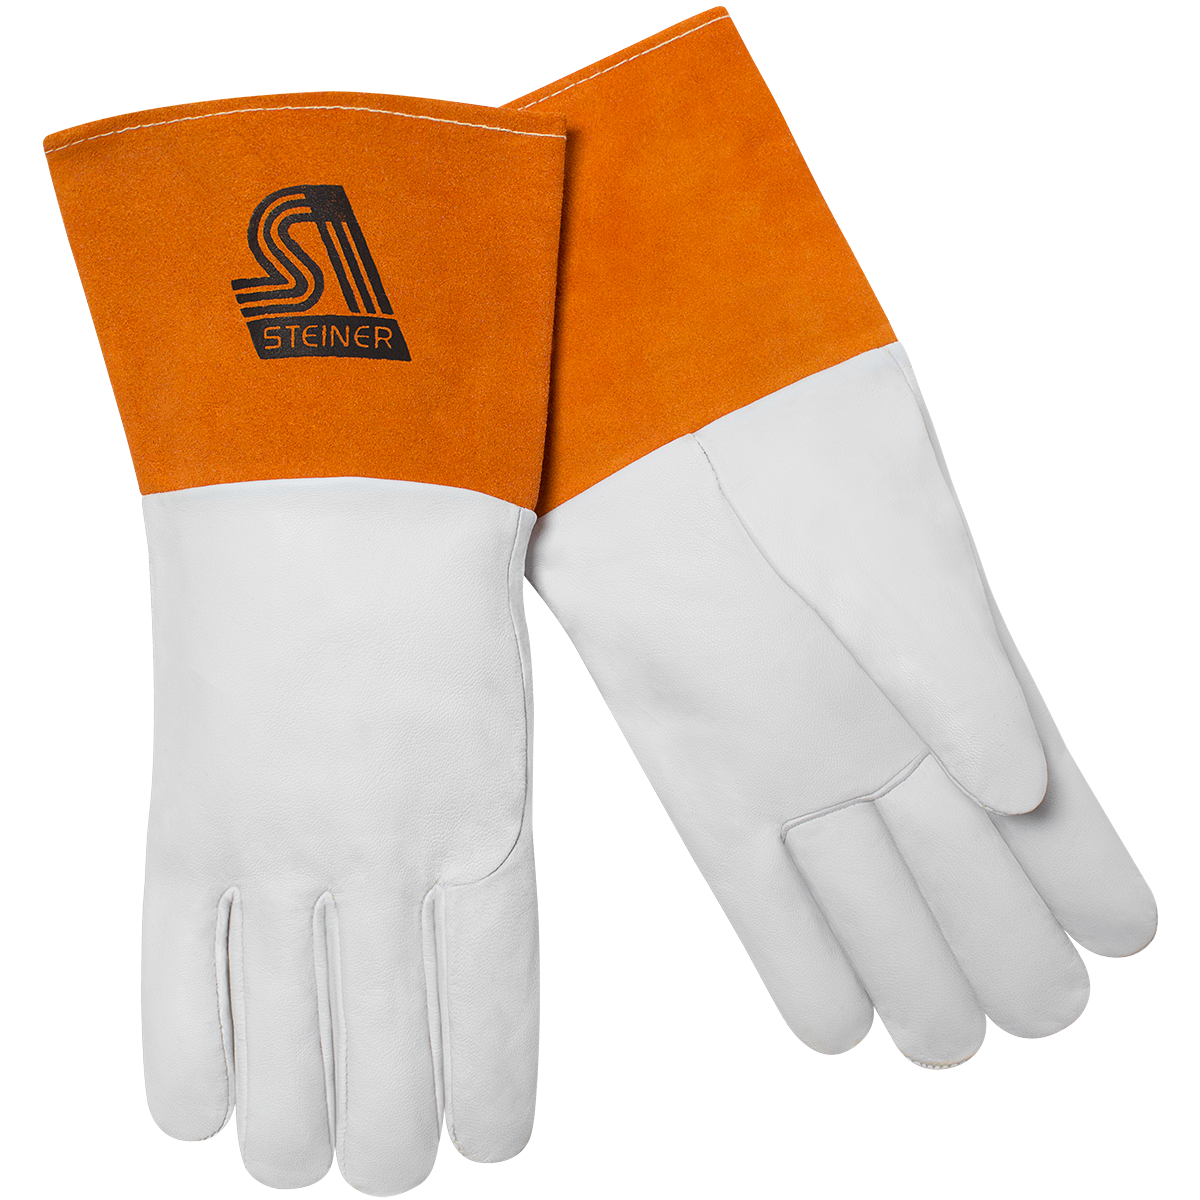 Gloves clipart rubber glove, Gloves rubber glove ...